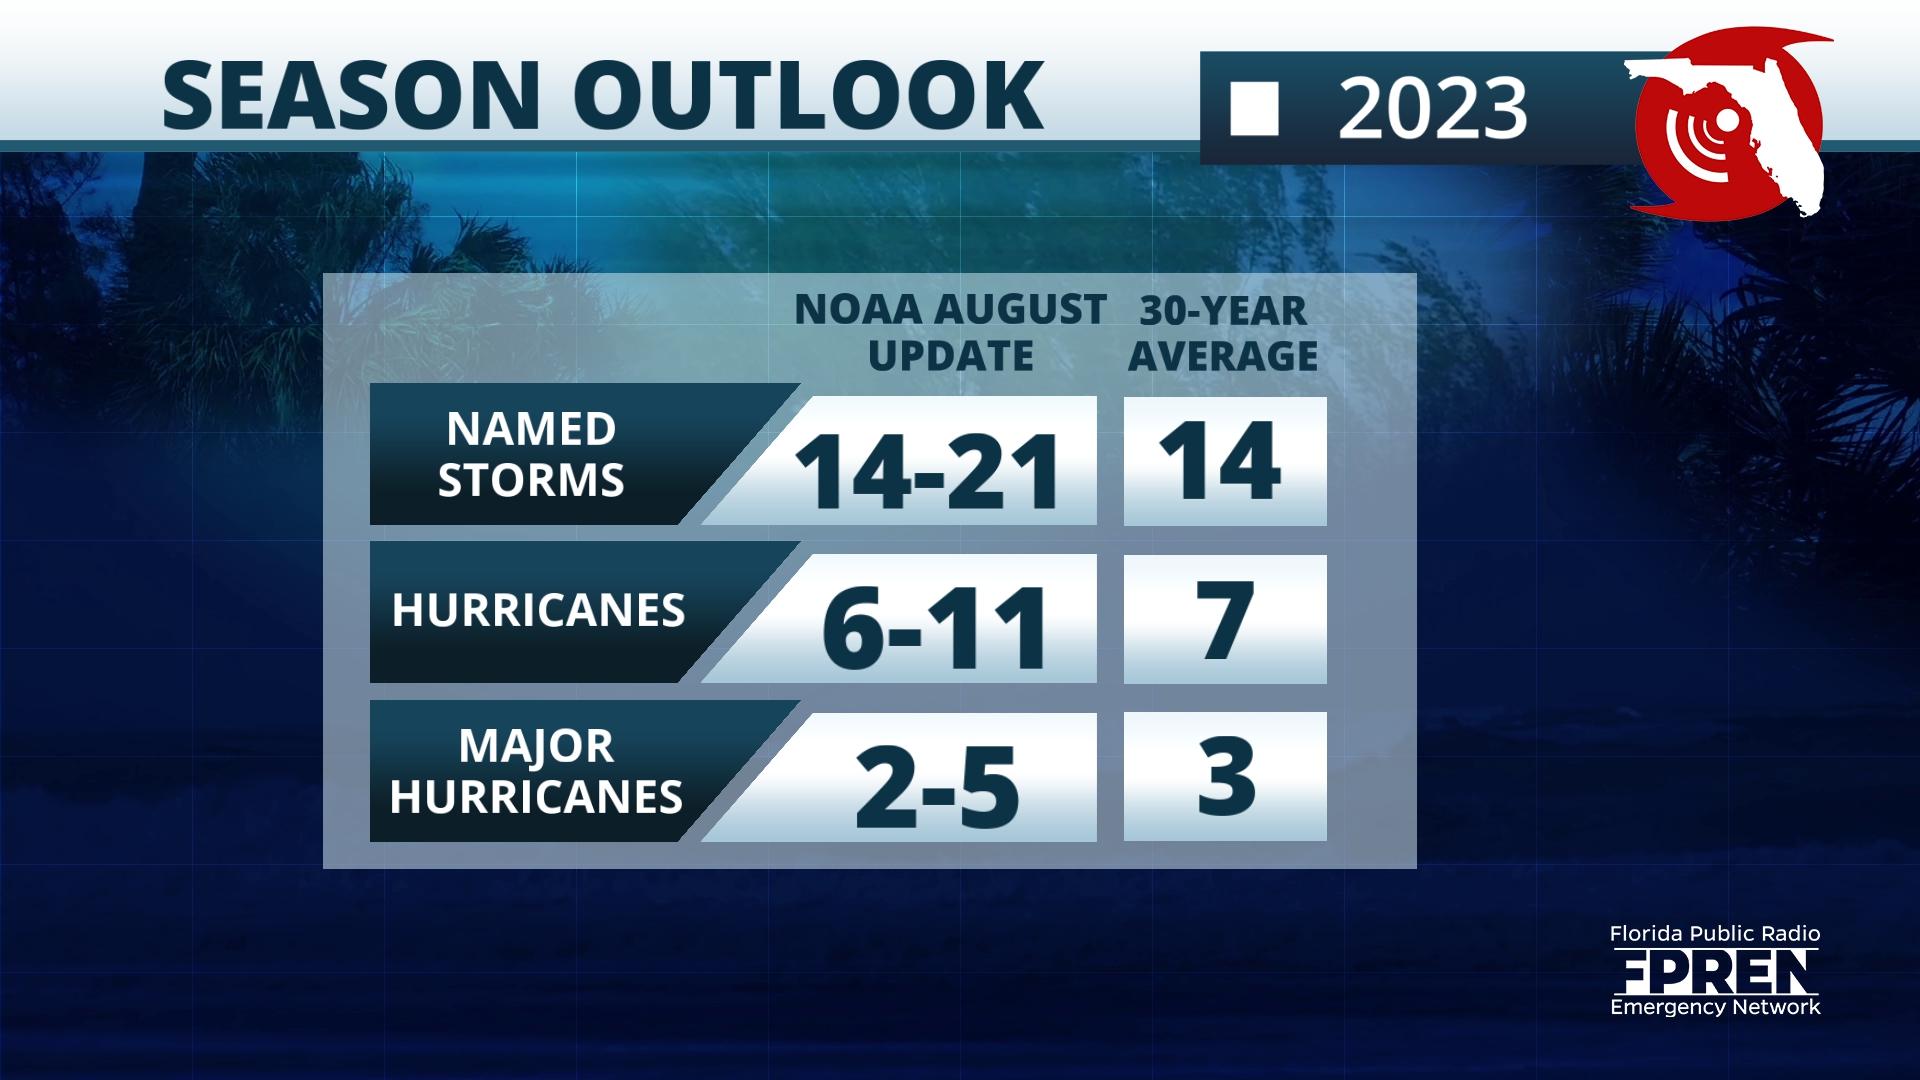 Featured image for “NOAA warns of busier hurricane season”